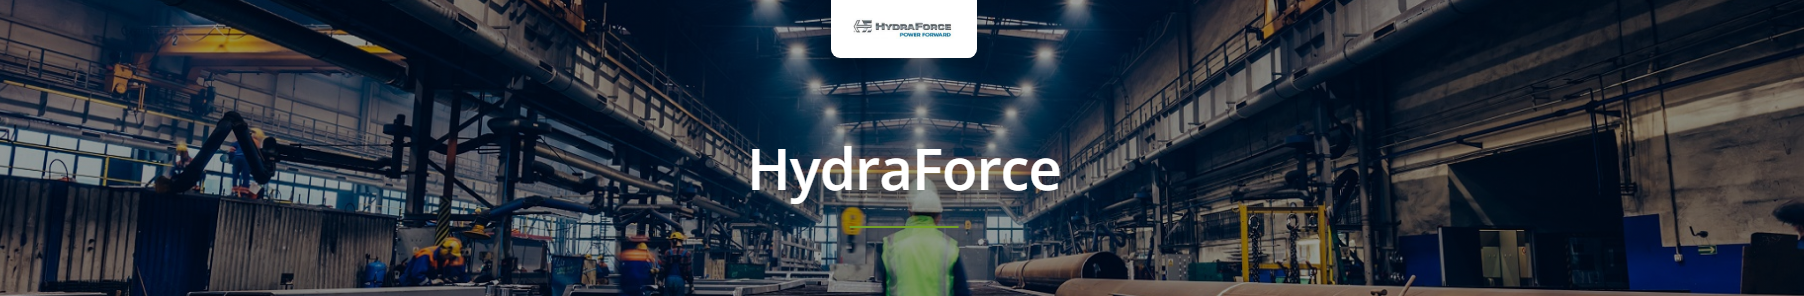 HydraForce Flow Control Valves